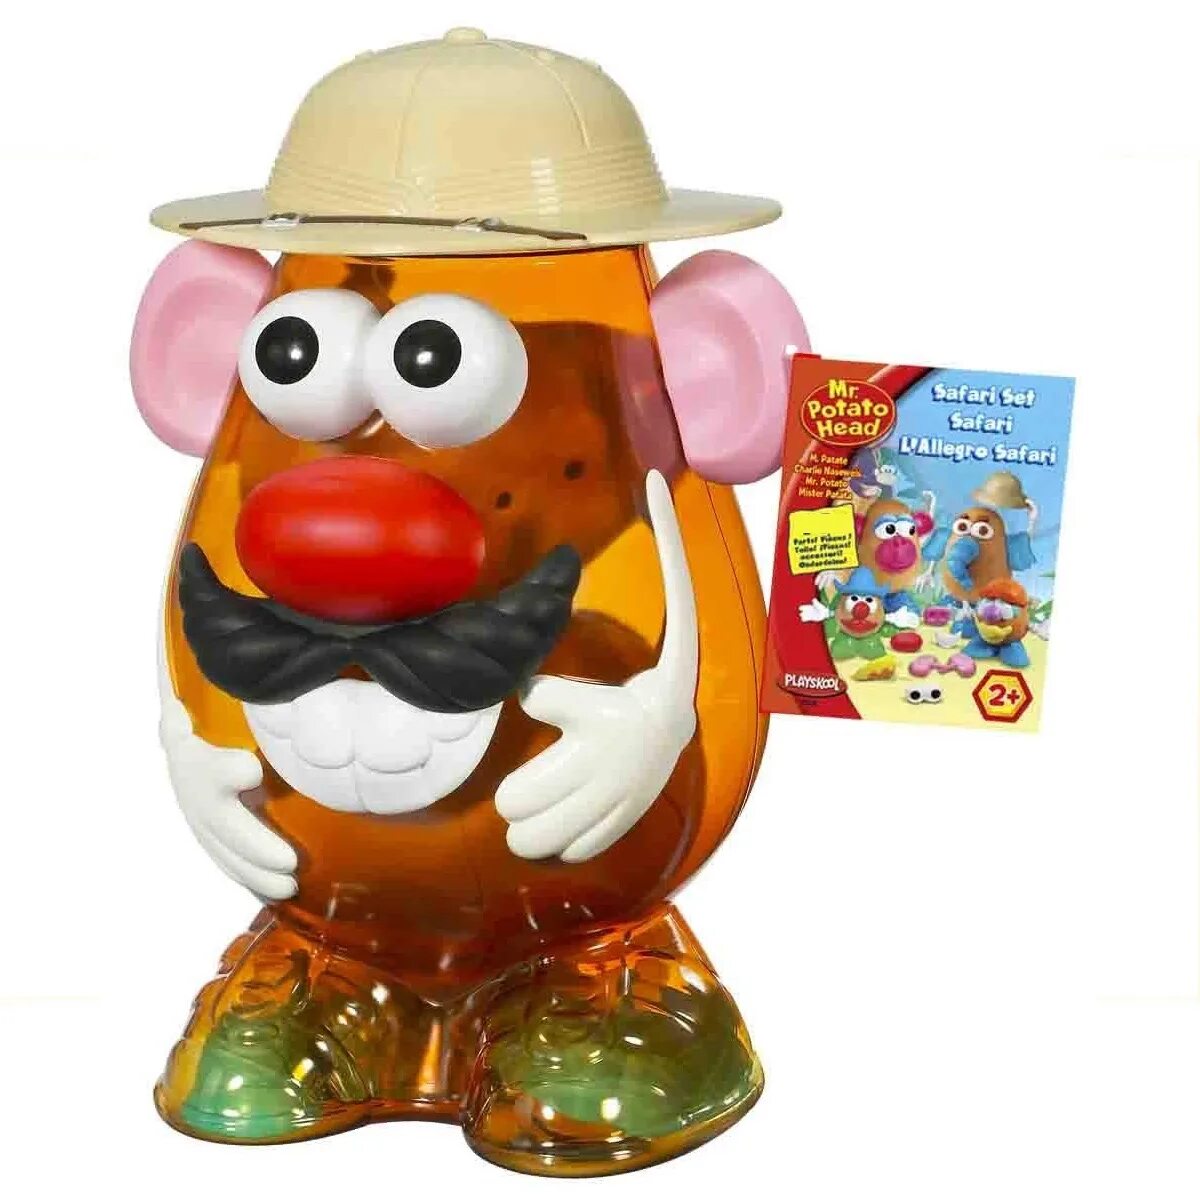 Купить головы игрушек. Mr Potato head игрушка. Фигурка Mr Potato head Core. Игровой набор Hasbro Mr Potato head Playskool Safari 20335. Hasbro Мистер картошка.